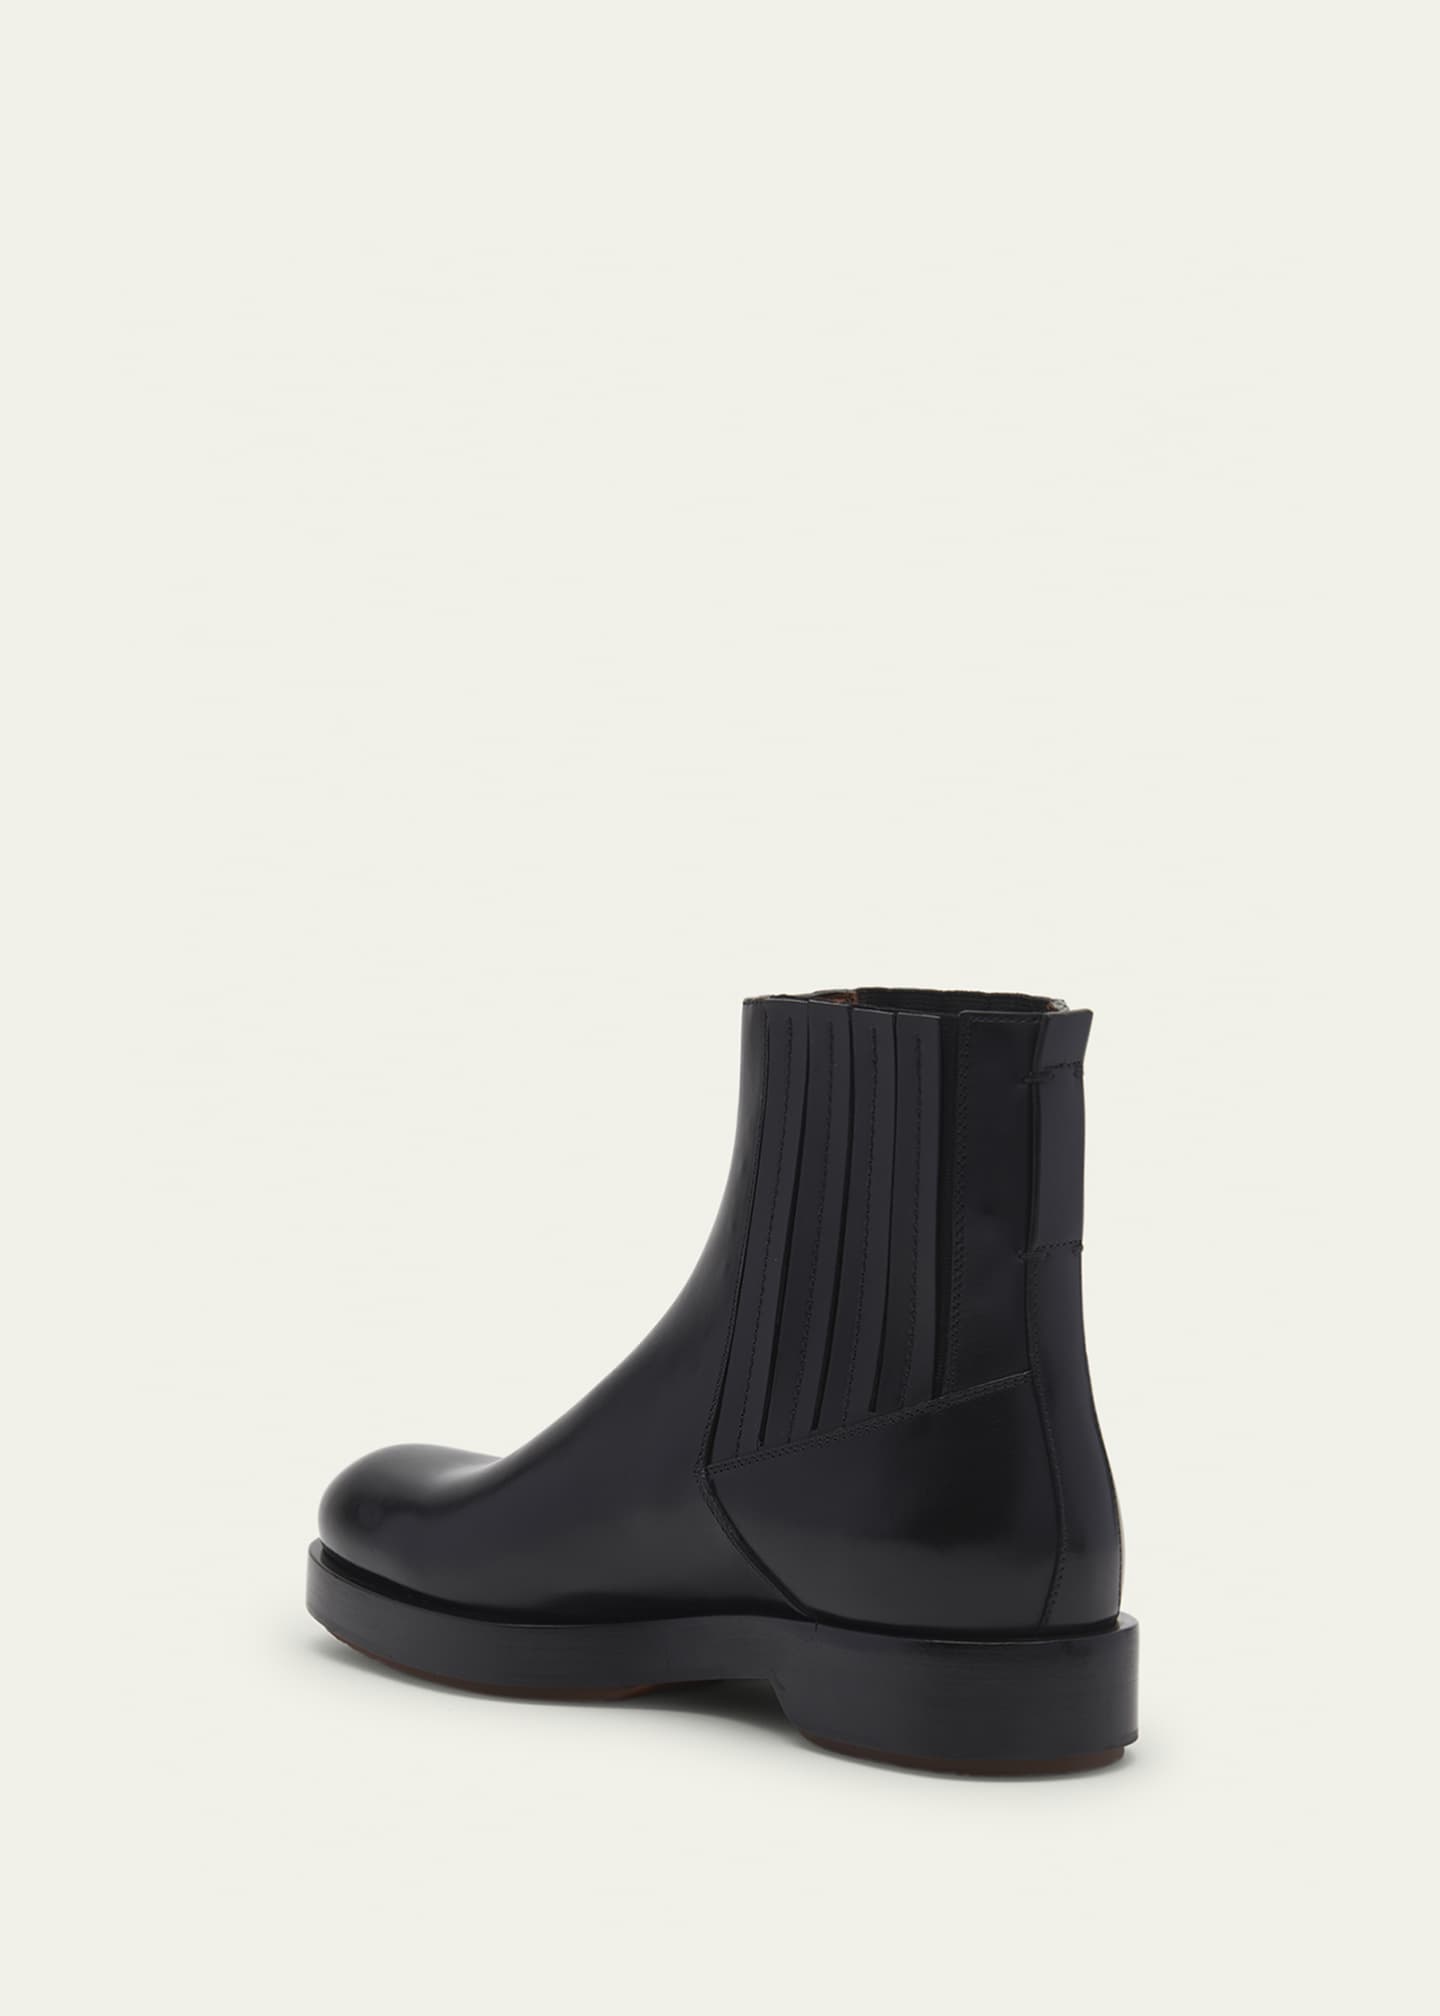 ZEGNA Men's Leather Chelsea Boots - Bergdorf Goodman